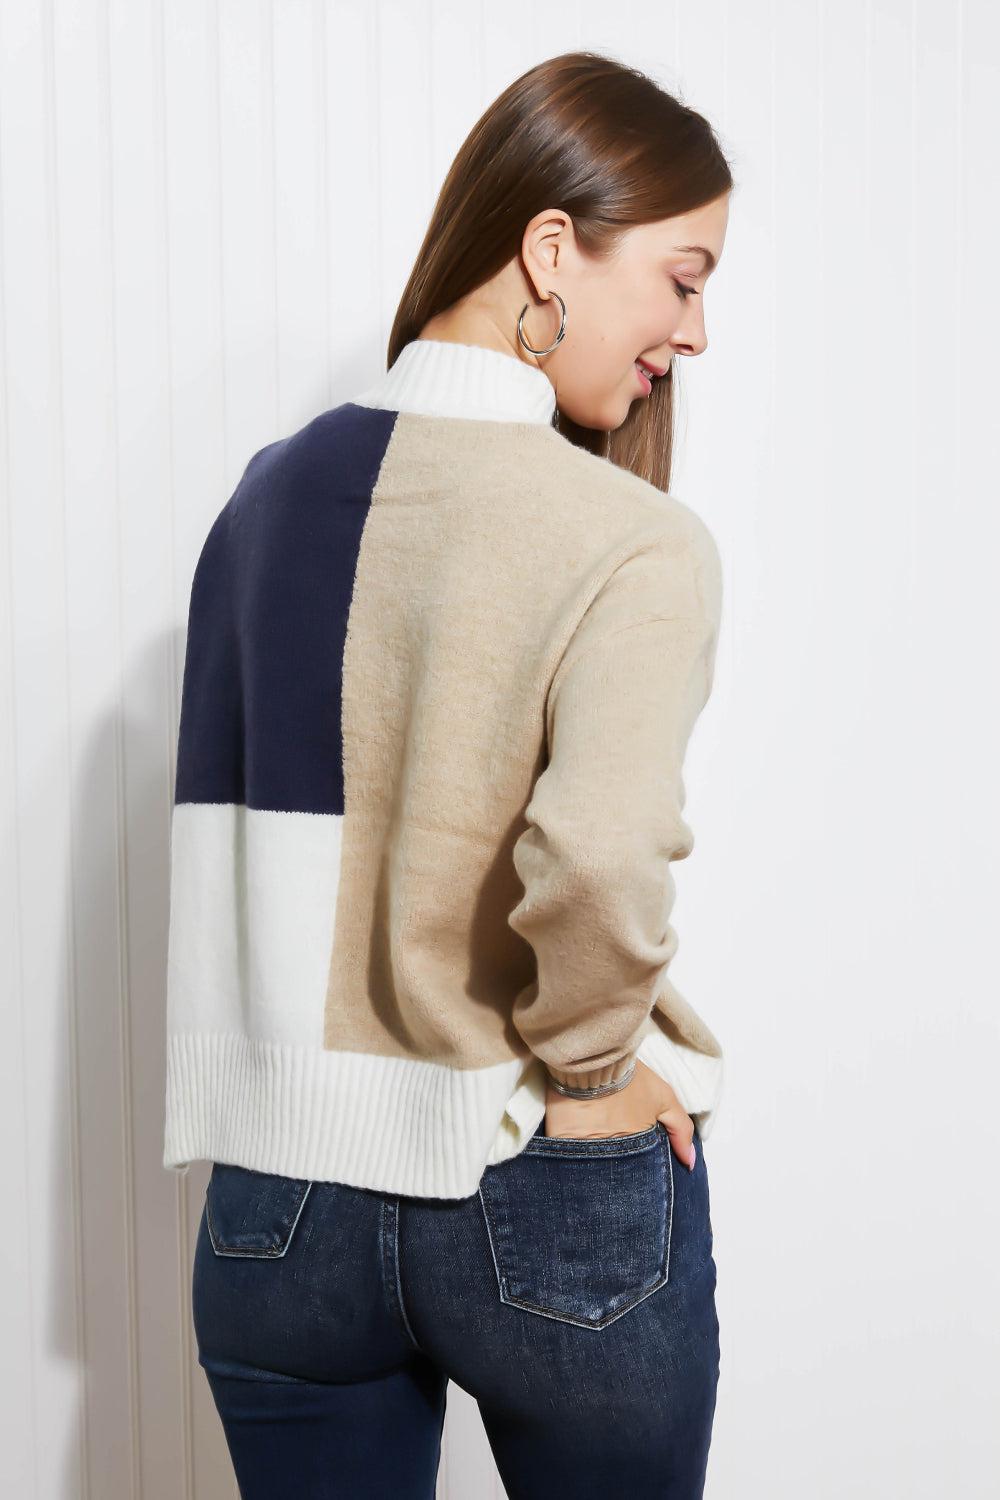 HYFVE Straight-A Student Color Block Sweater